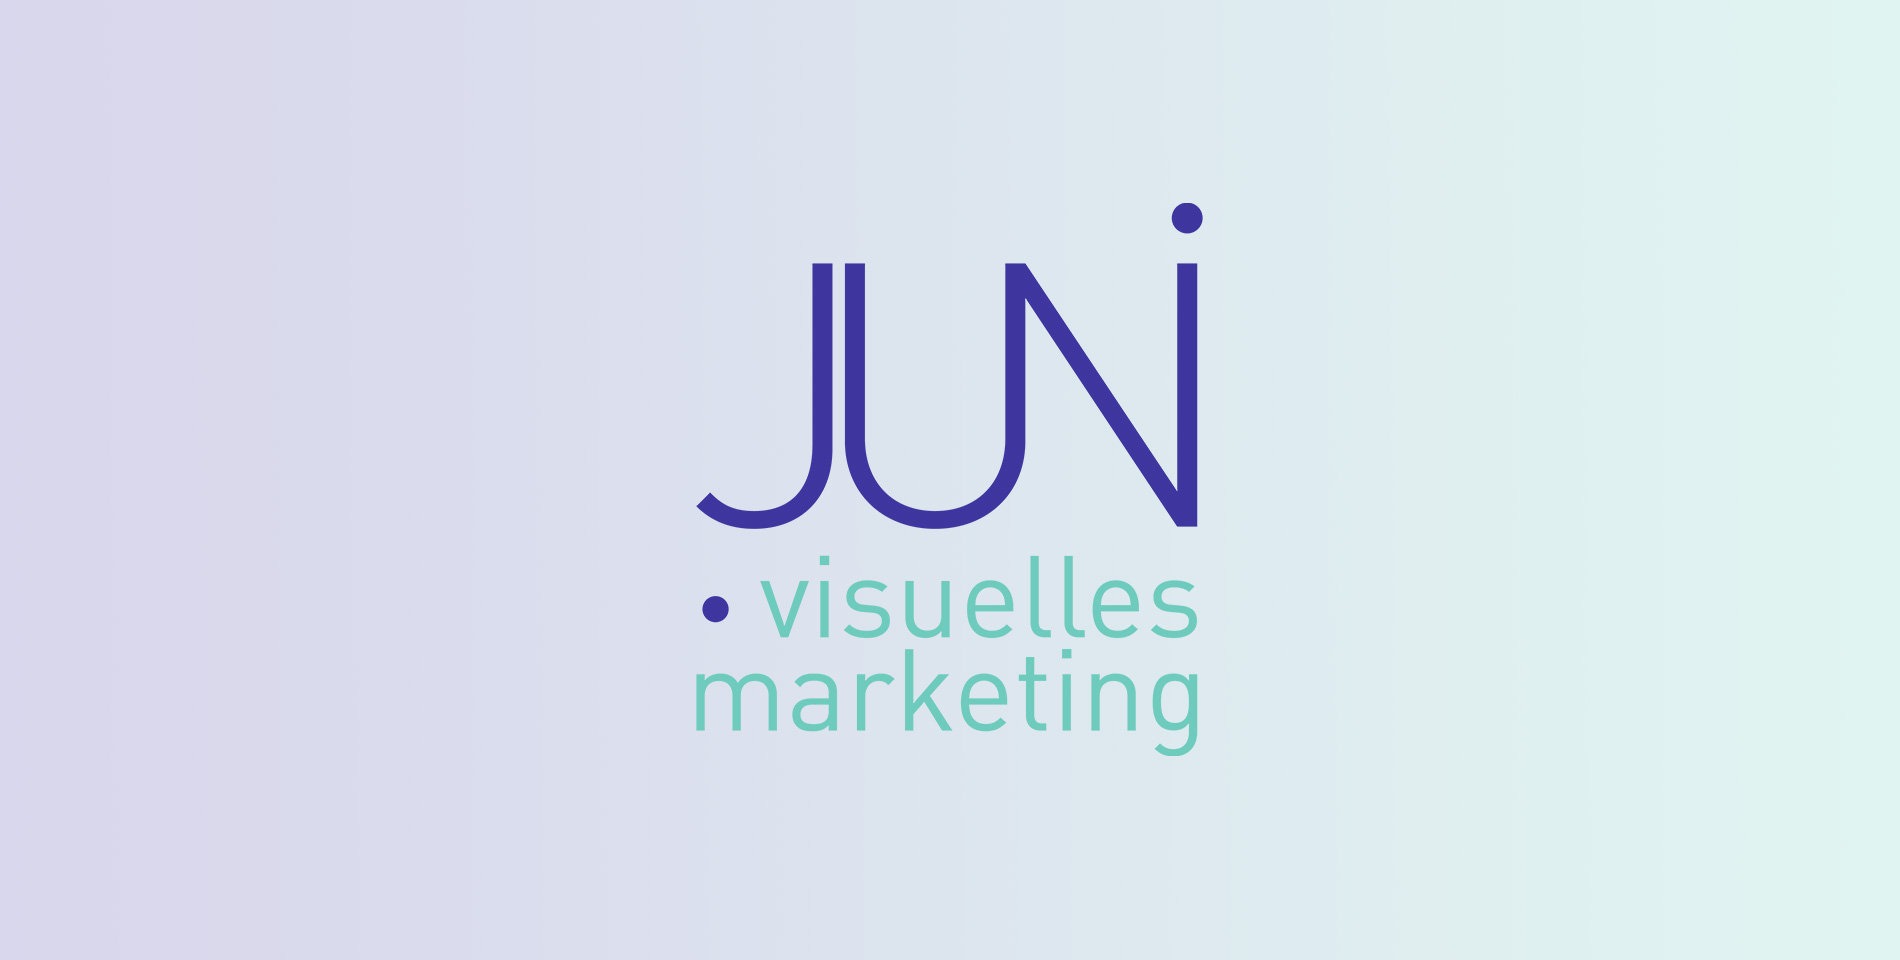 JUNI Visuelles Marketing